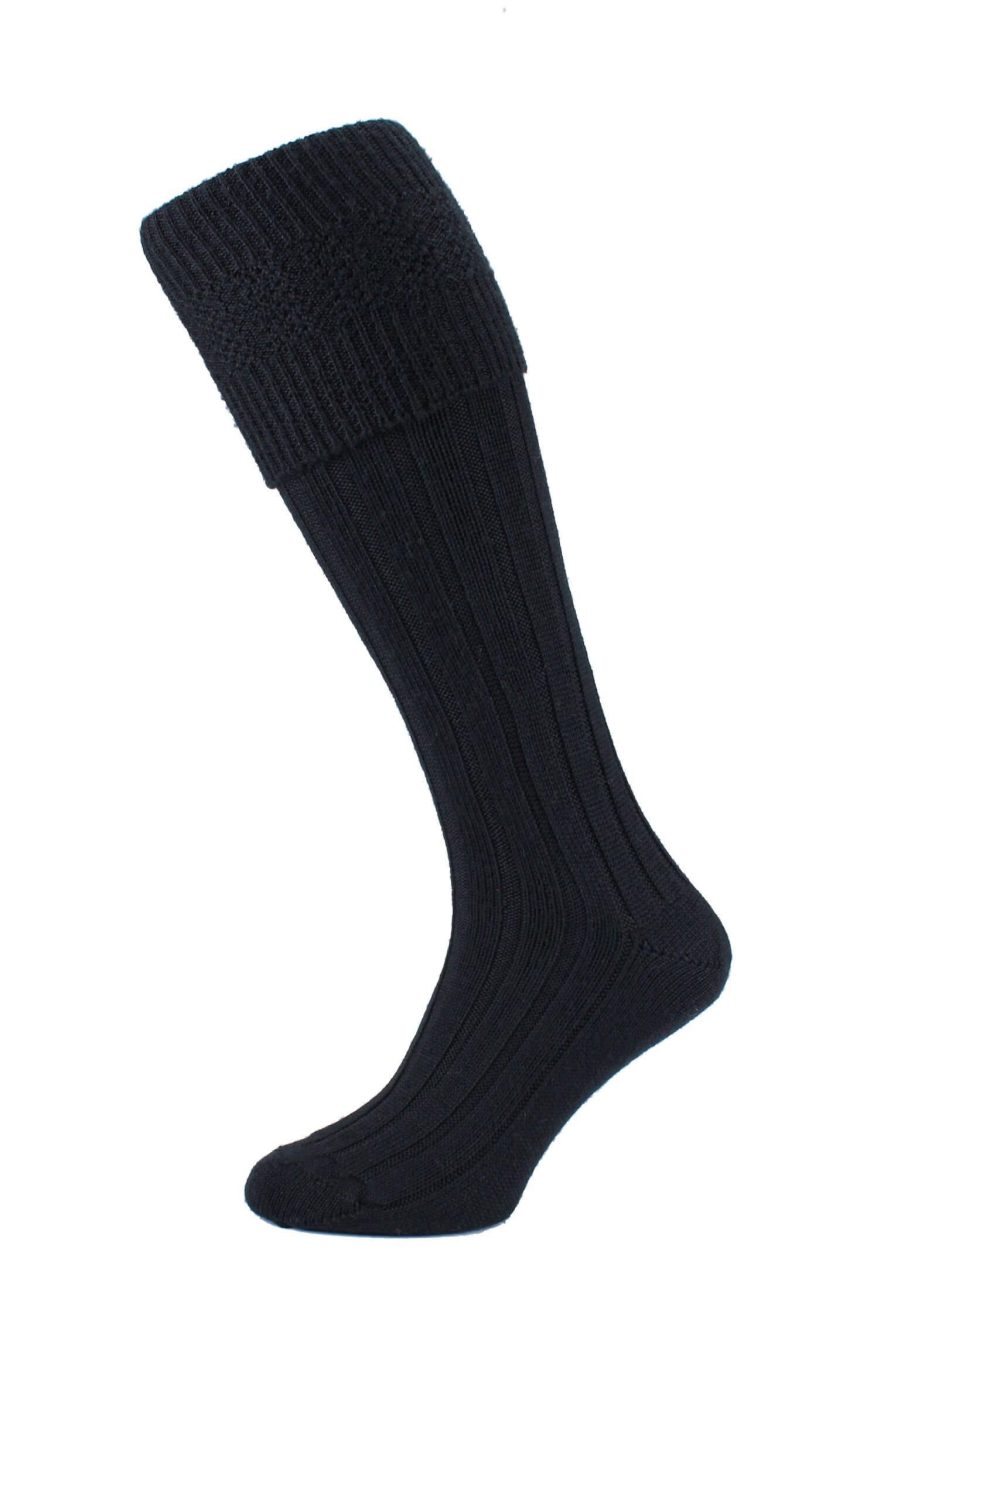 Black Kilt Socks